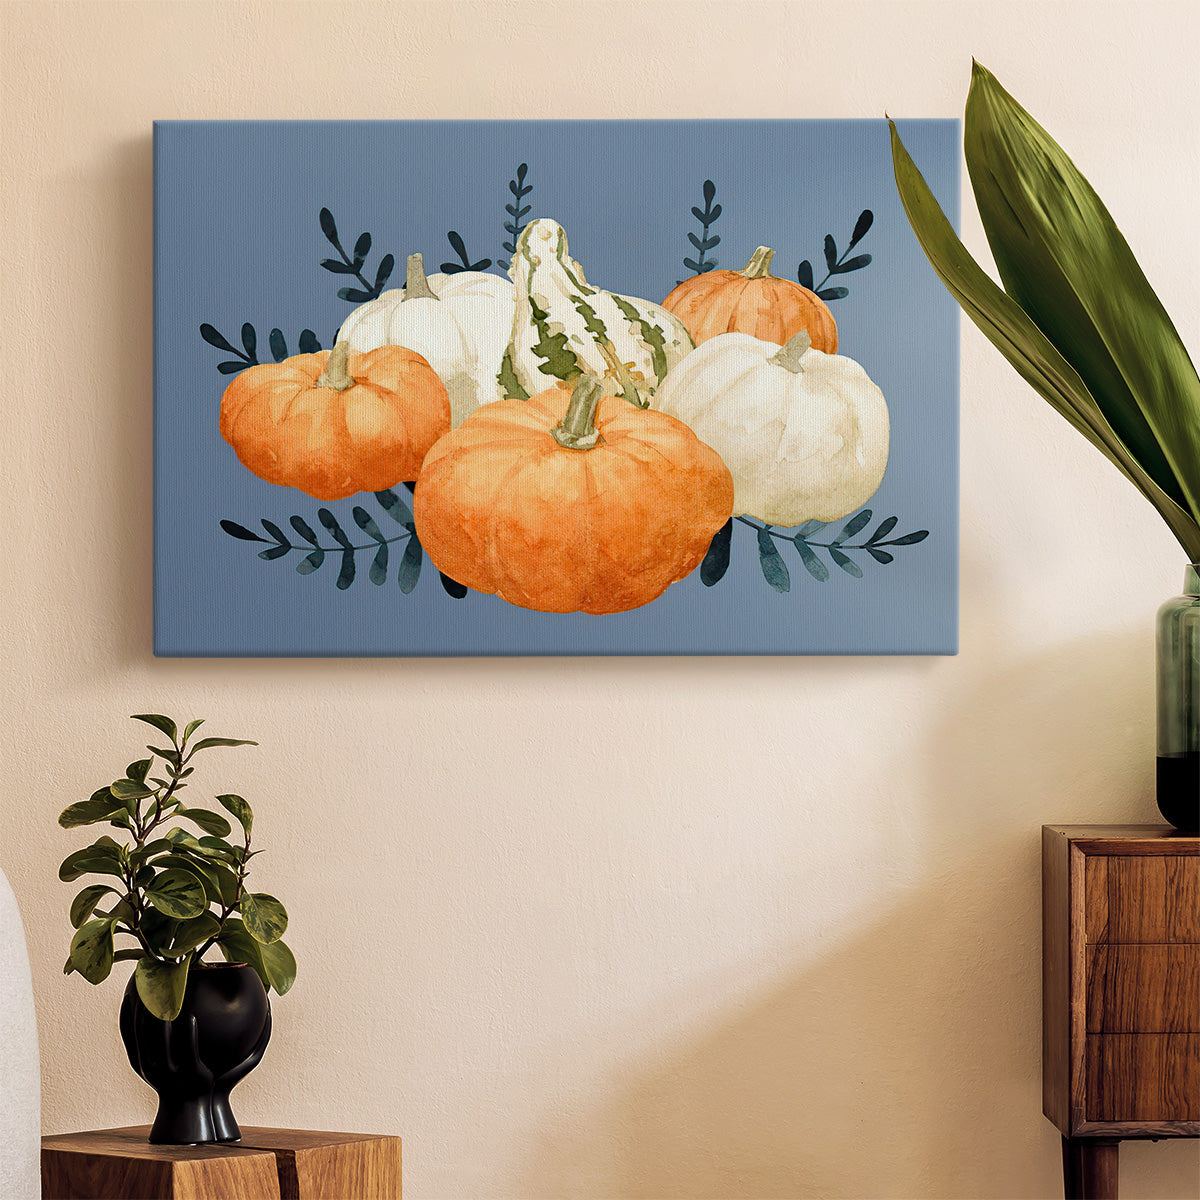 Autumn Orange & Blues II Premium Gallery Wrapped Canvas - Ready to Hang